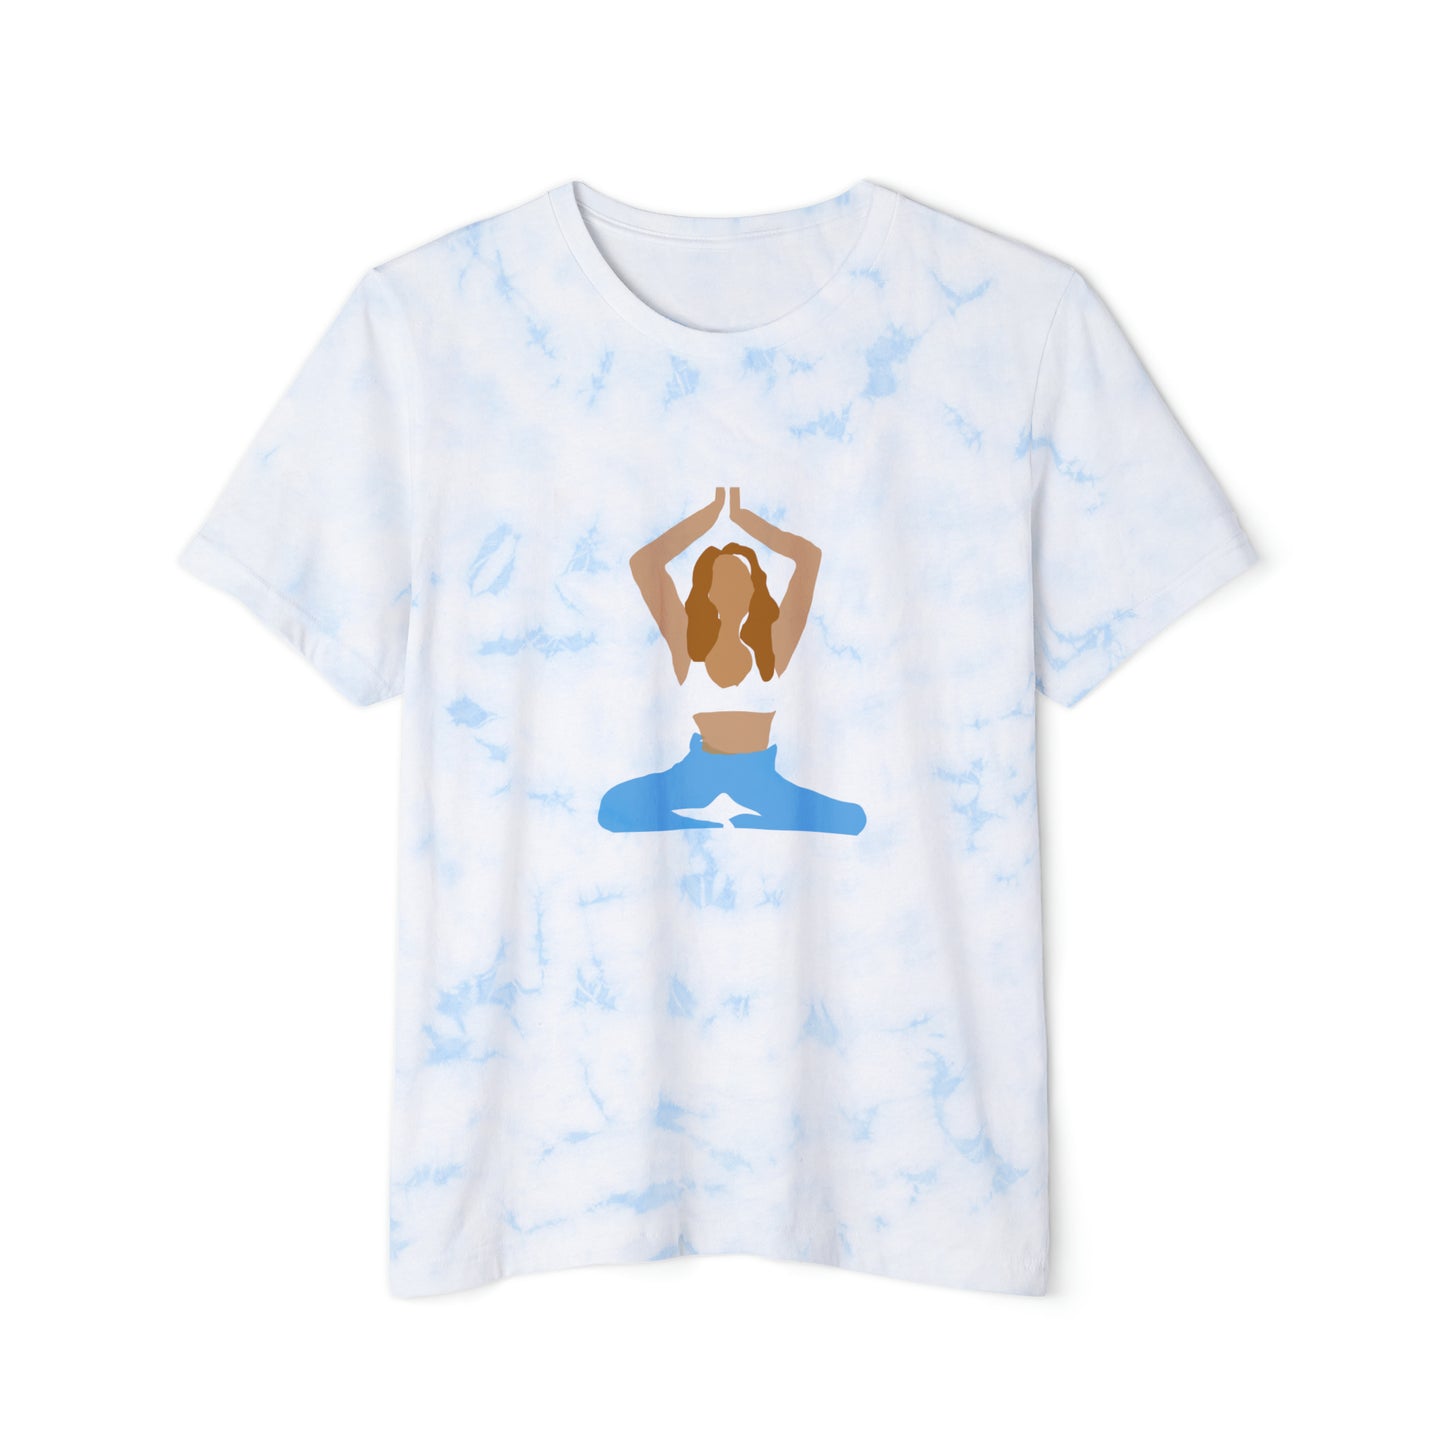 Yoga, Unisex FWD Fashion Tie-Dyed T-Shirt